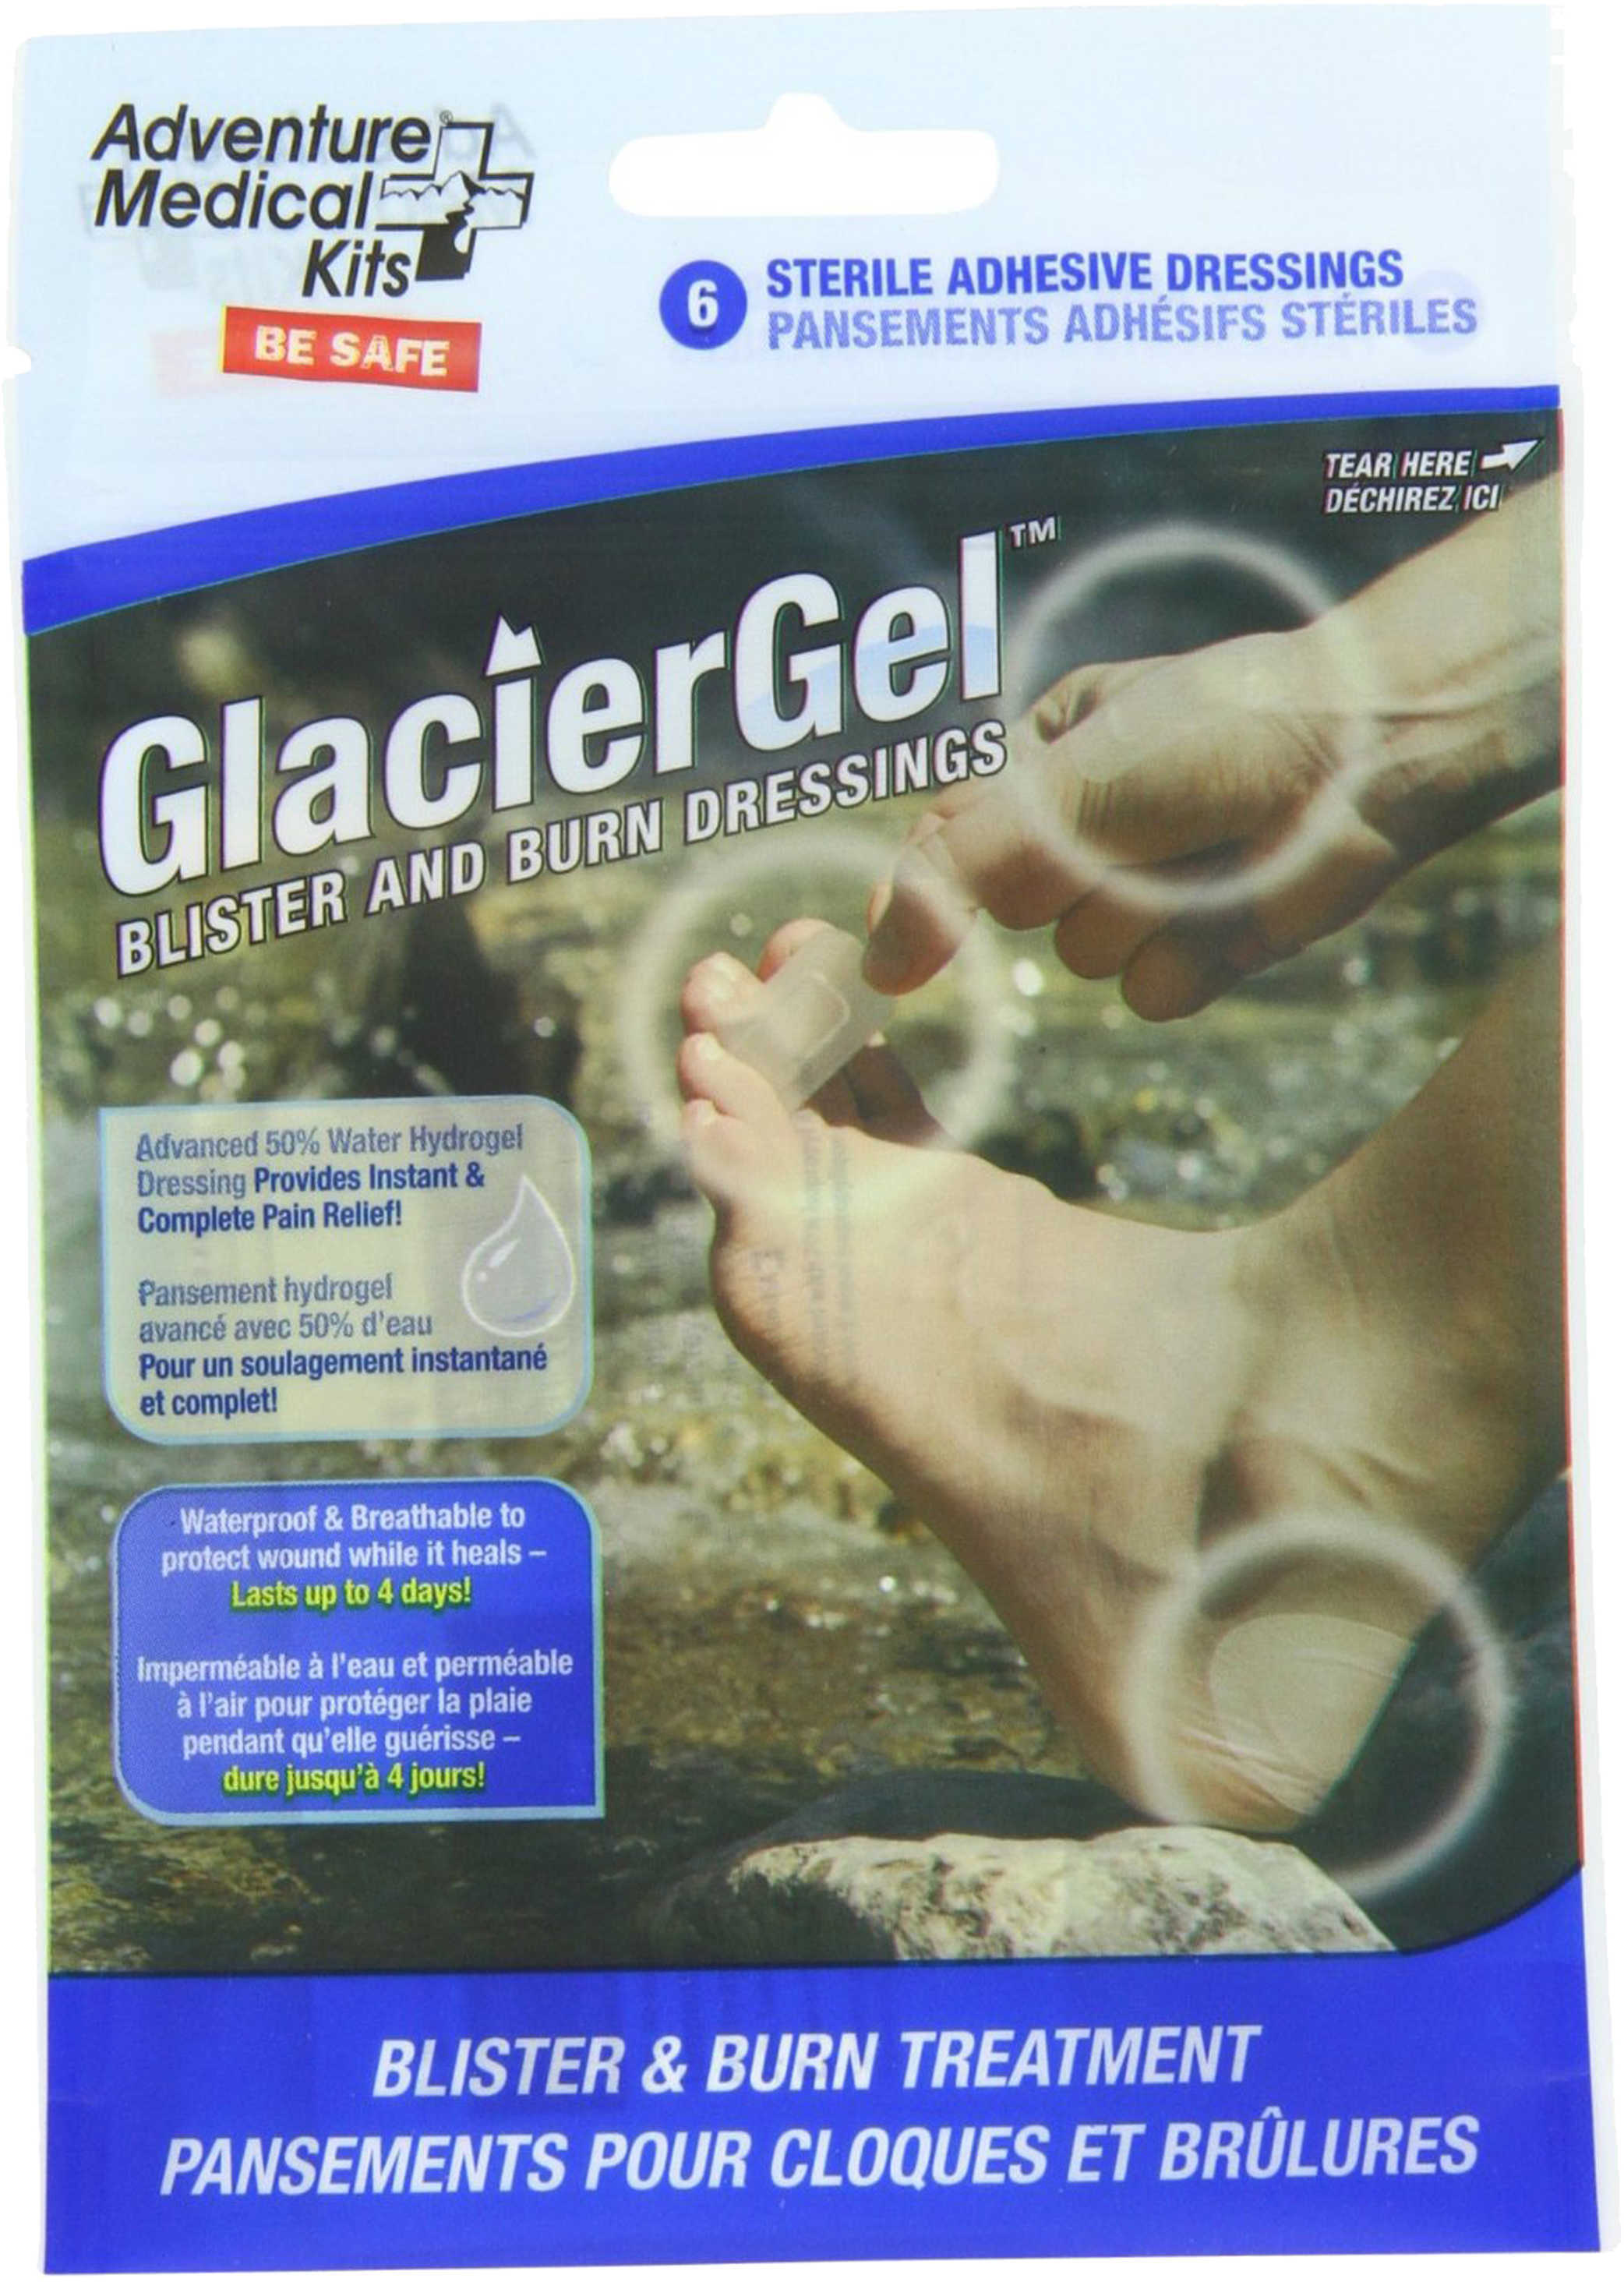 Adventure Medical Kits / Tender Corp Glaciergel 0155-0552